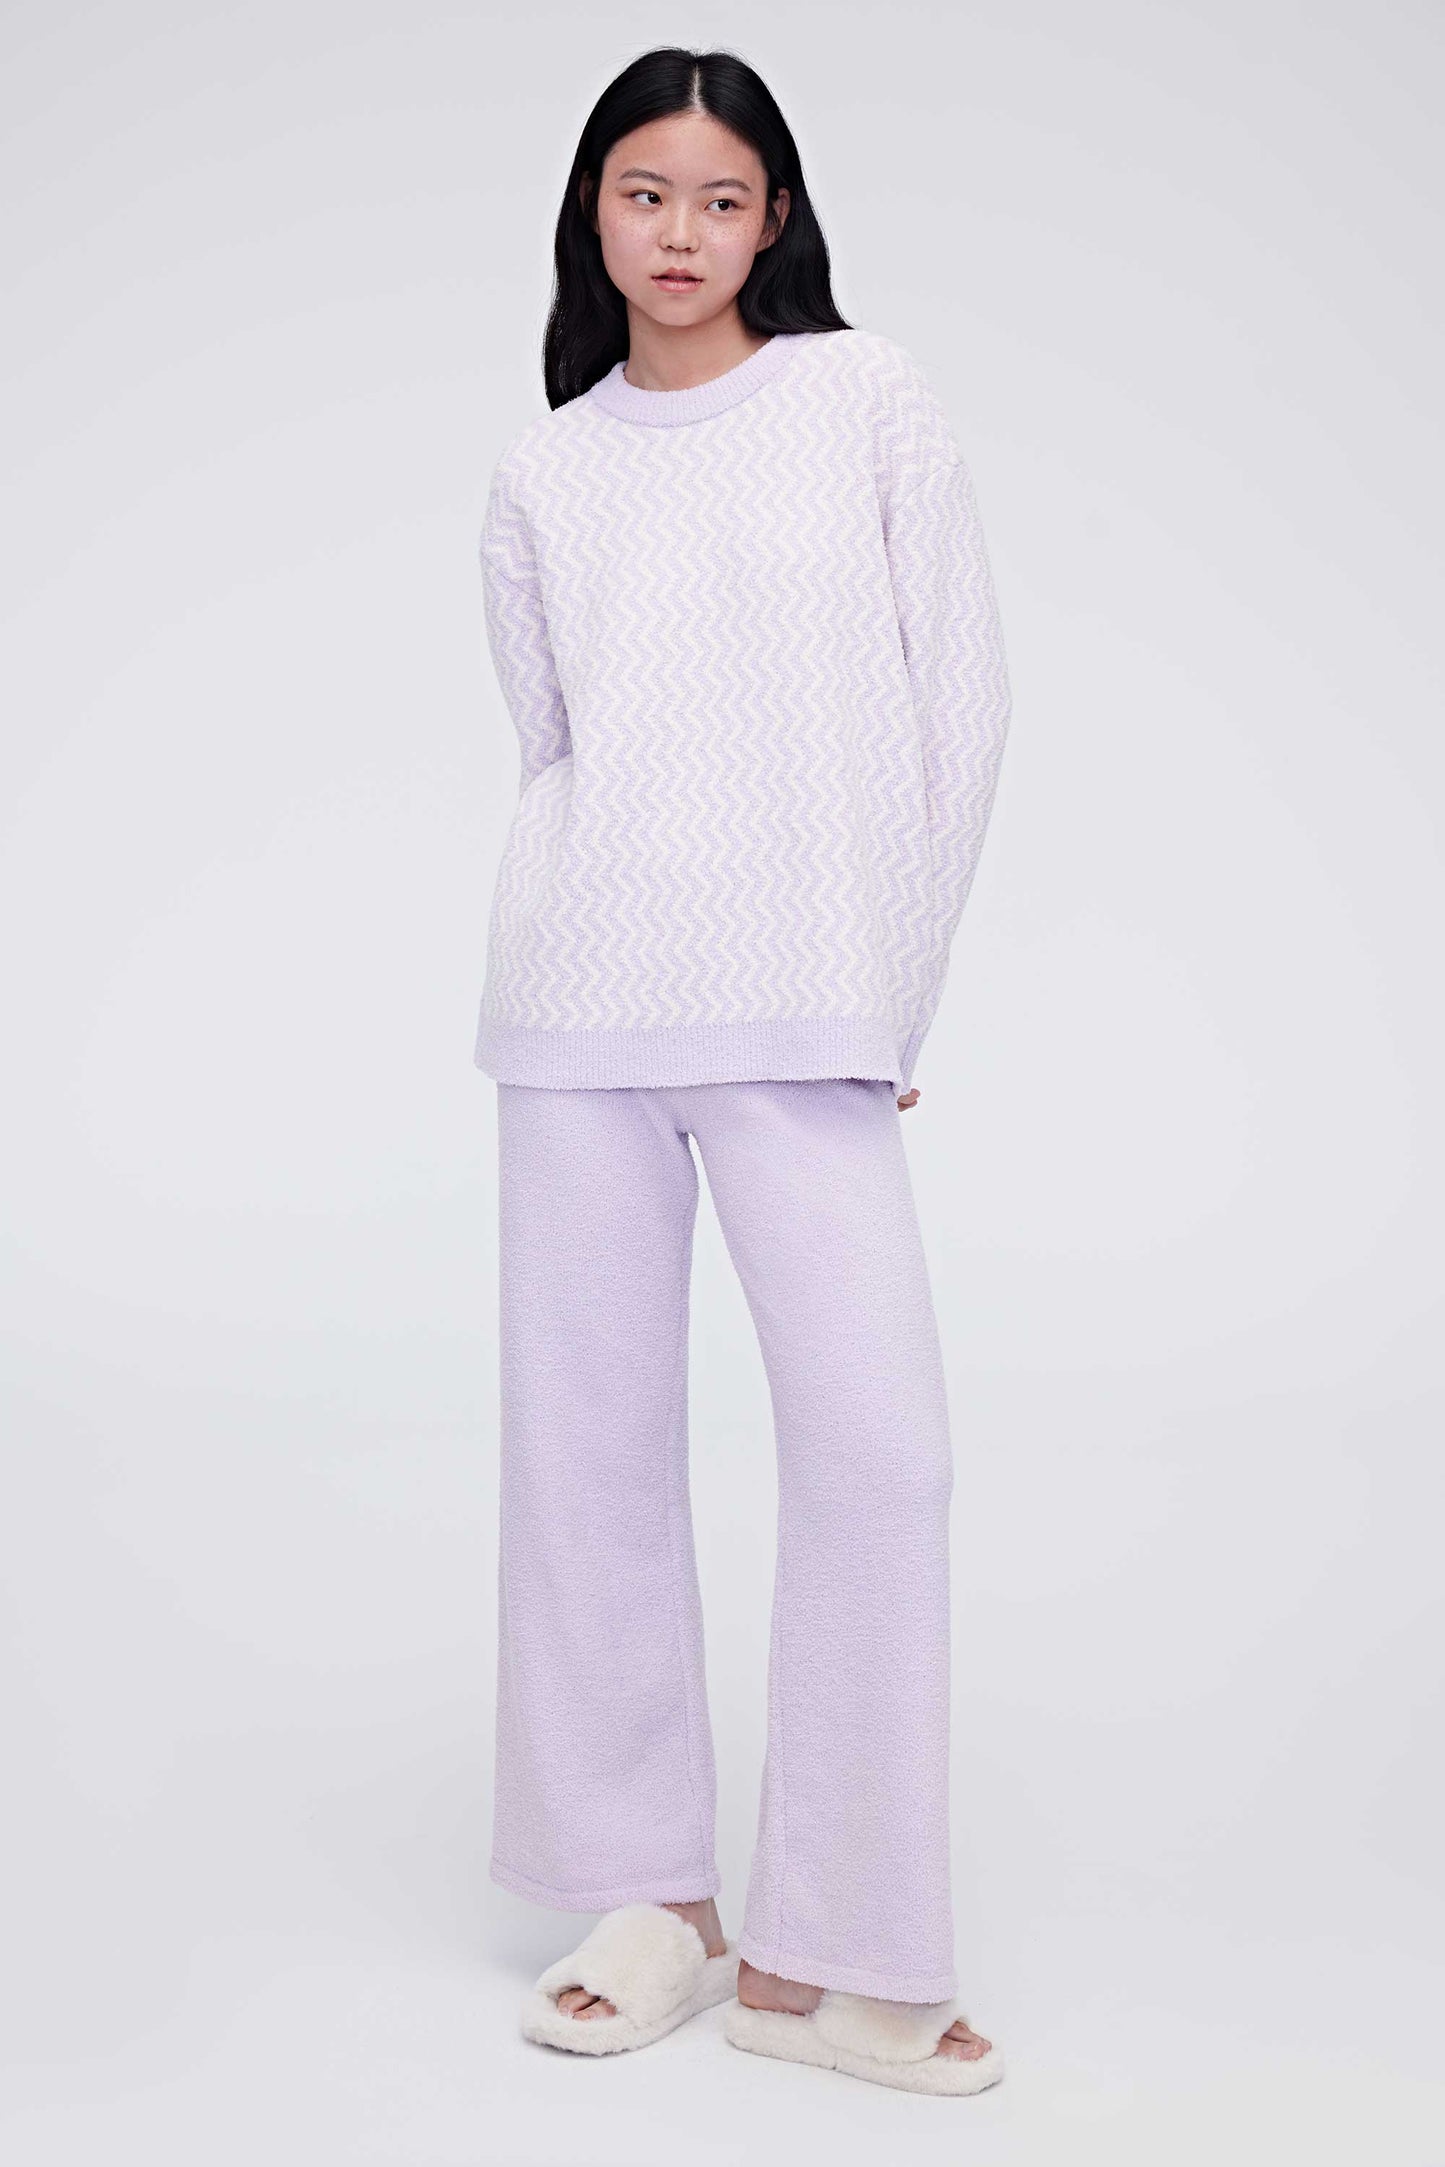 A woman wearing a purple plush fleece pajama set